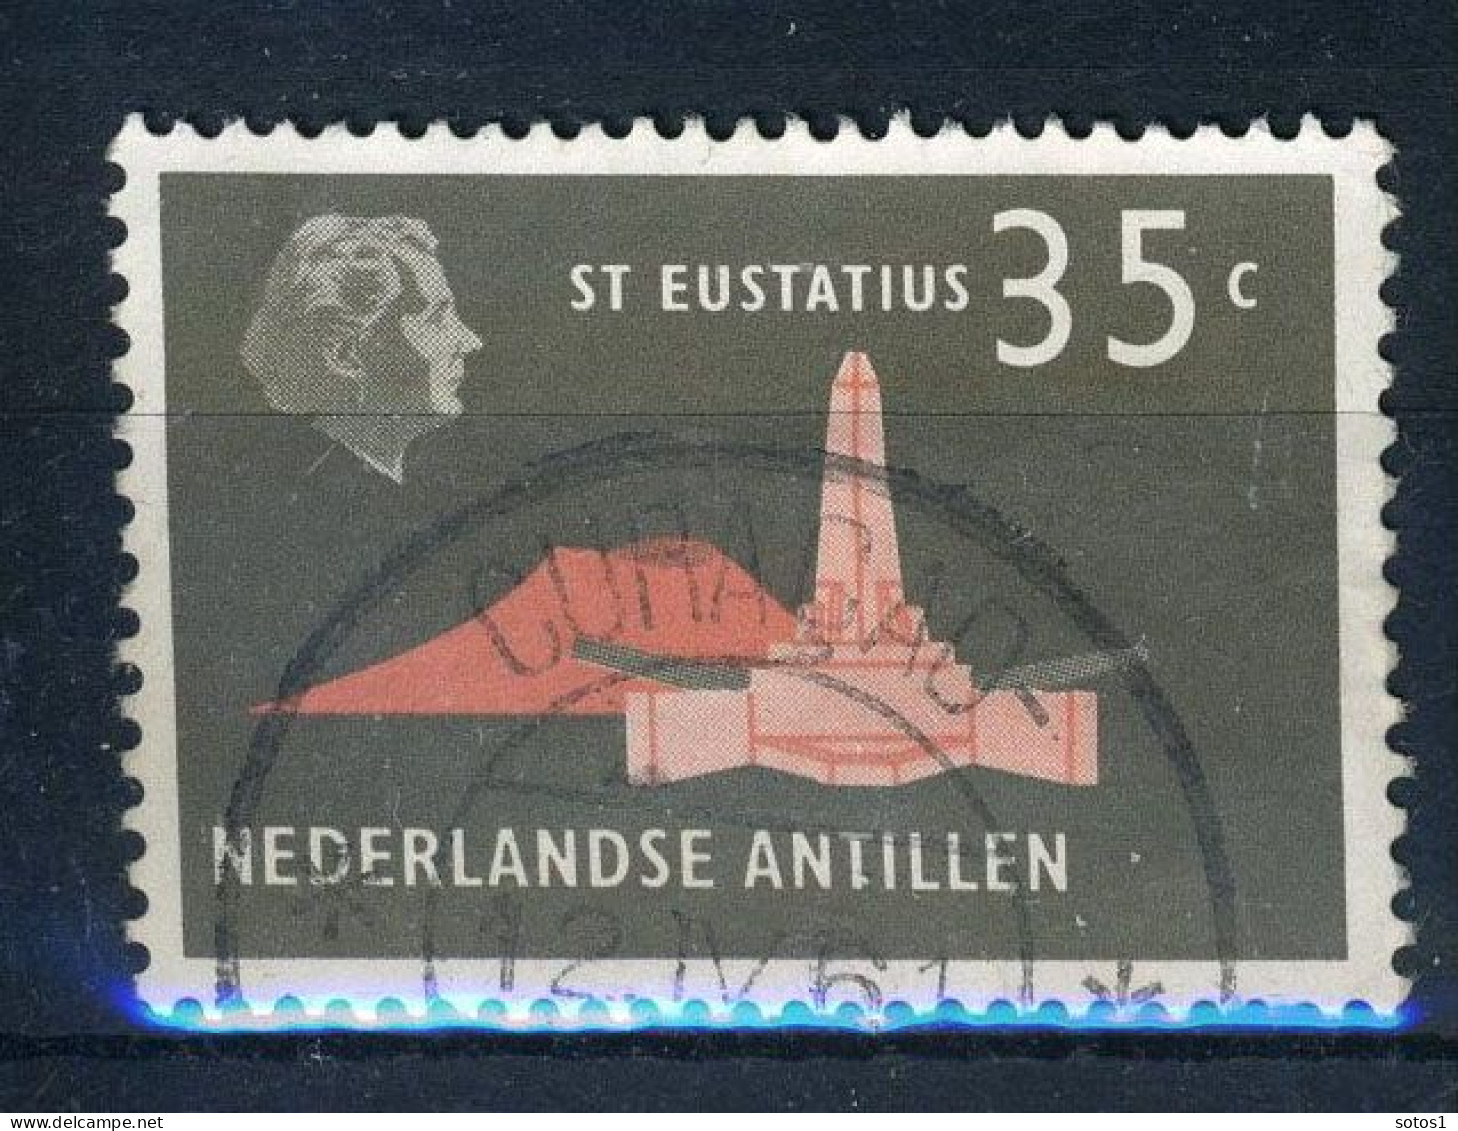 NL. ANTILLEN 284 Gestempeld 1958-1959 - Koningin Juliana  - Curacao, Netherlands Antilles, Aruba